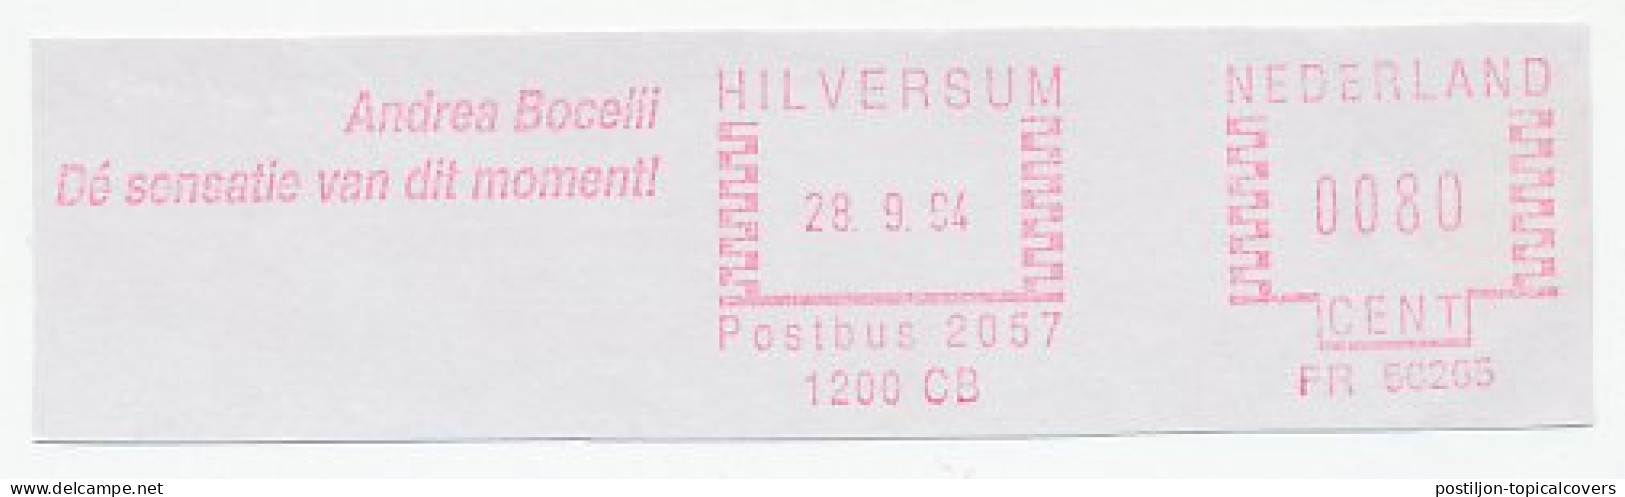 Meter Cut Netherlands 1994 Andrea Bocelli - The Sensation Of This Moment - Muziek